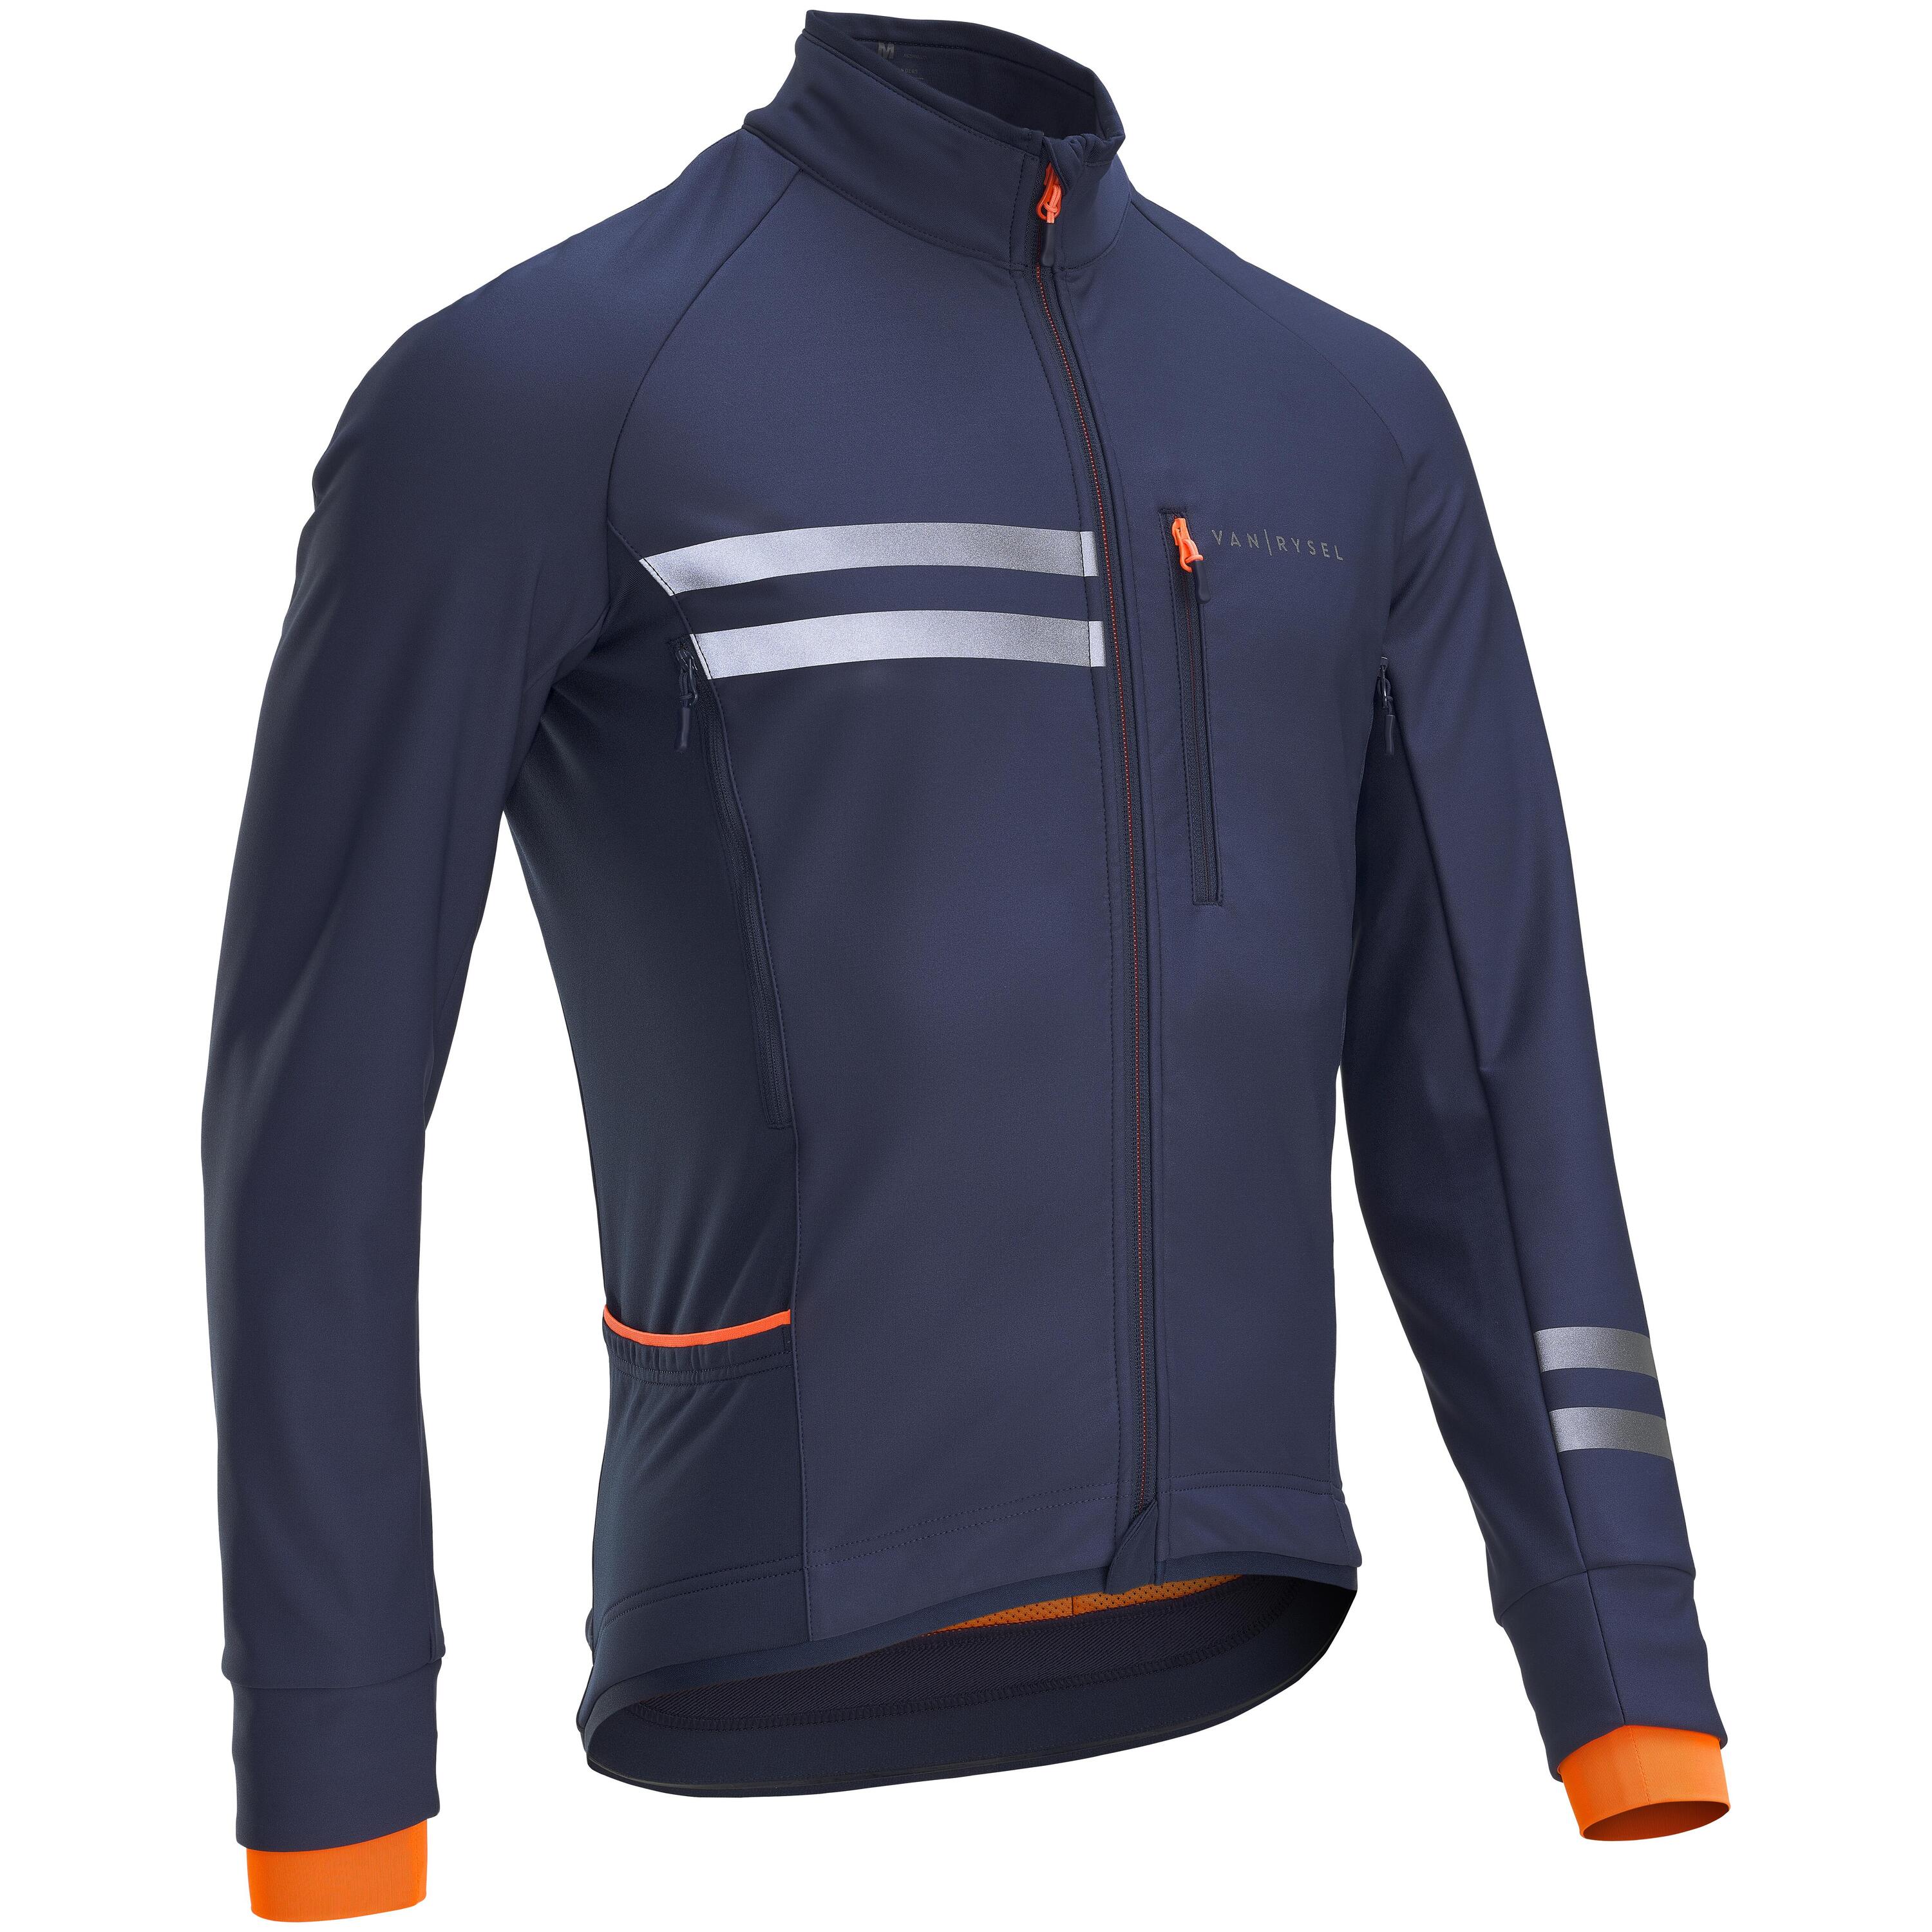 Men's Cycling Winter Jacket RC500 - Navy Blue/Orange 1/7